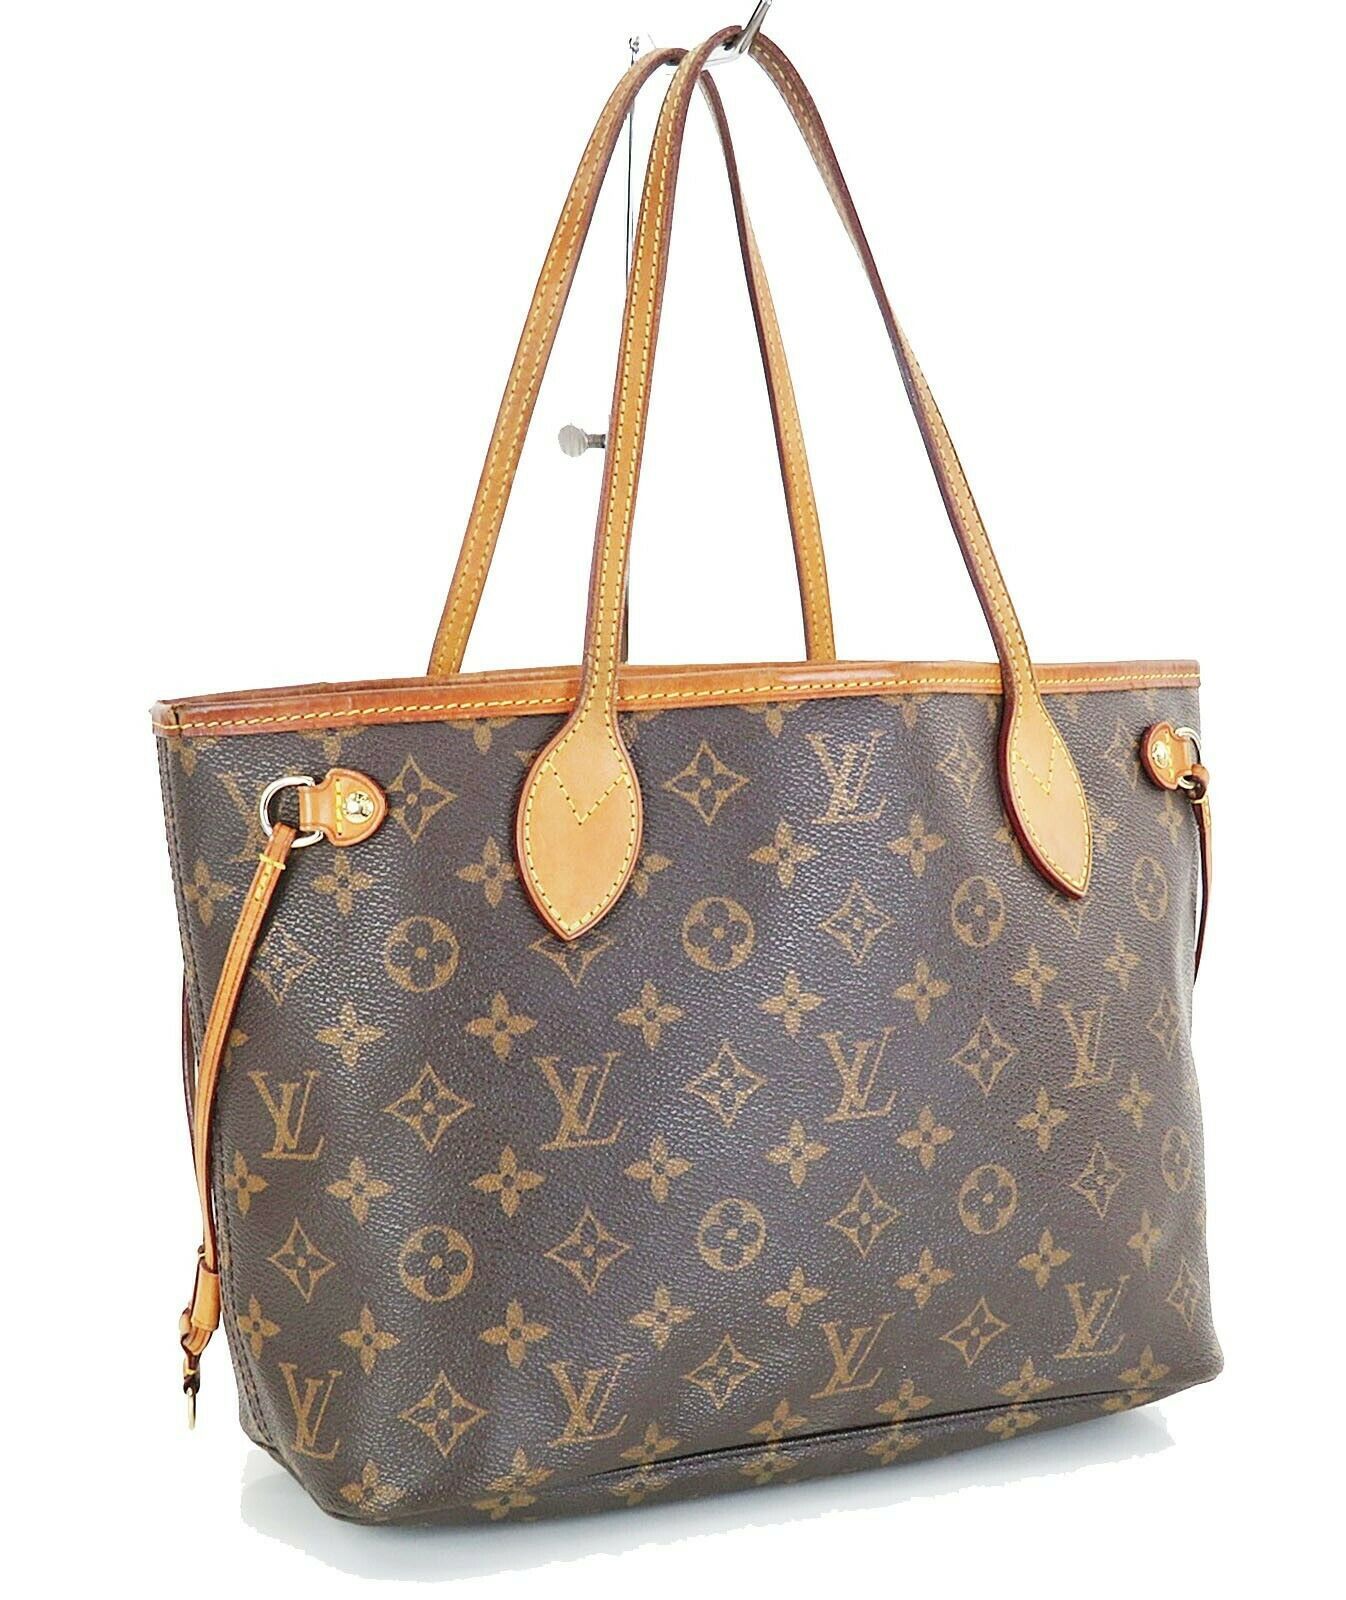 Authentic LOUIS VUITTON Neverfull PM Monogram Tote Bag Purse #35241 - Women&#39;s Bags & Handbags